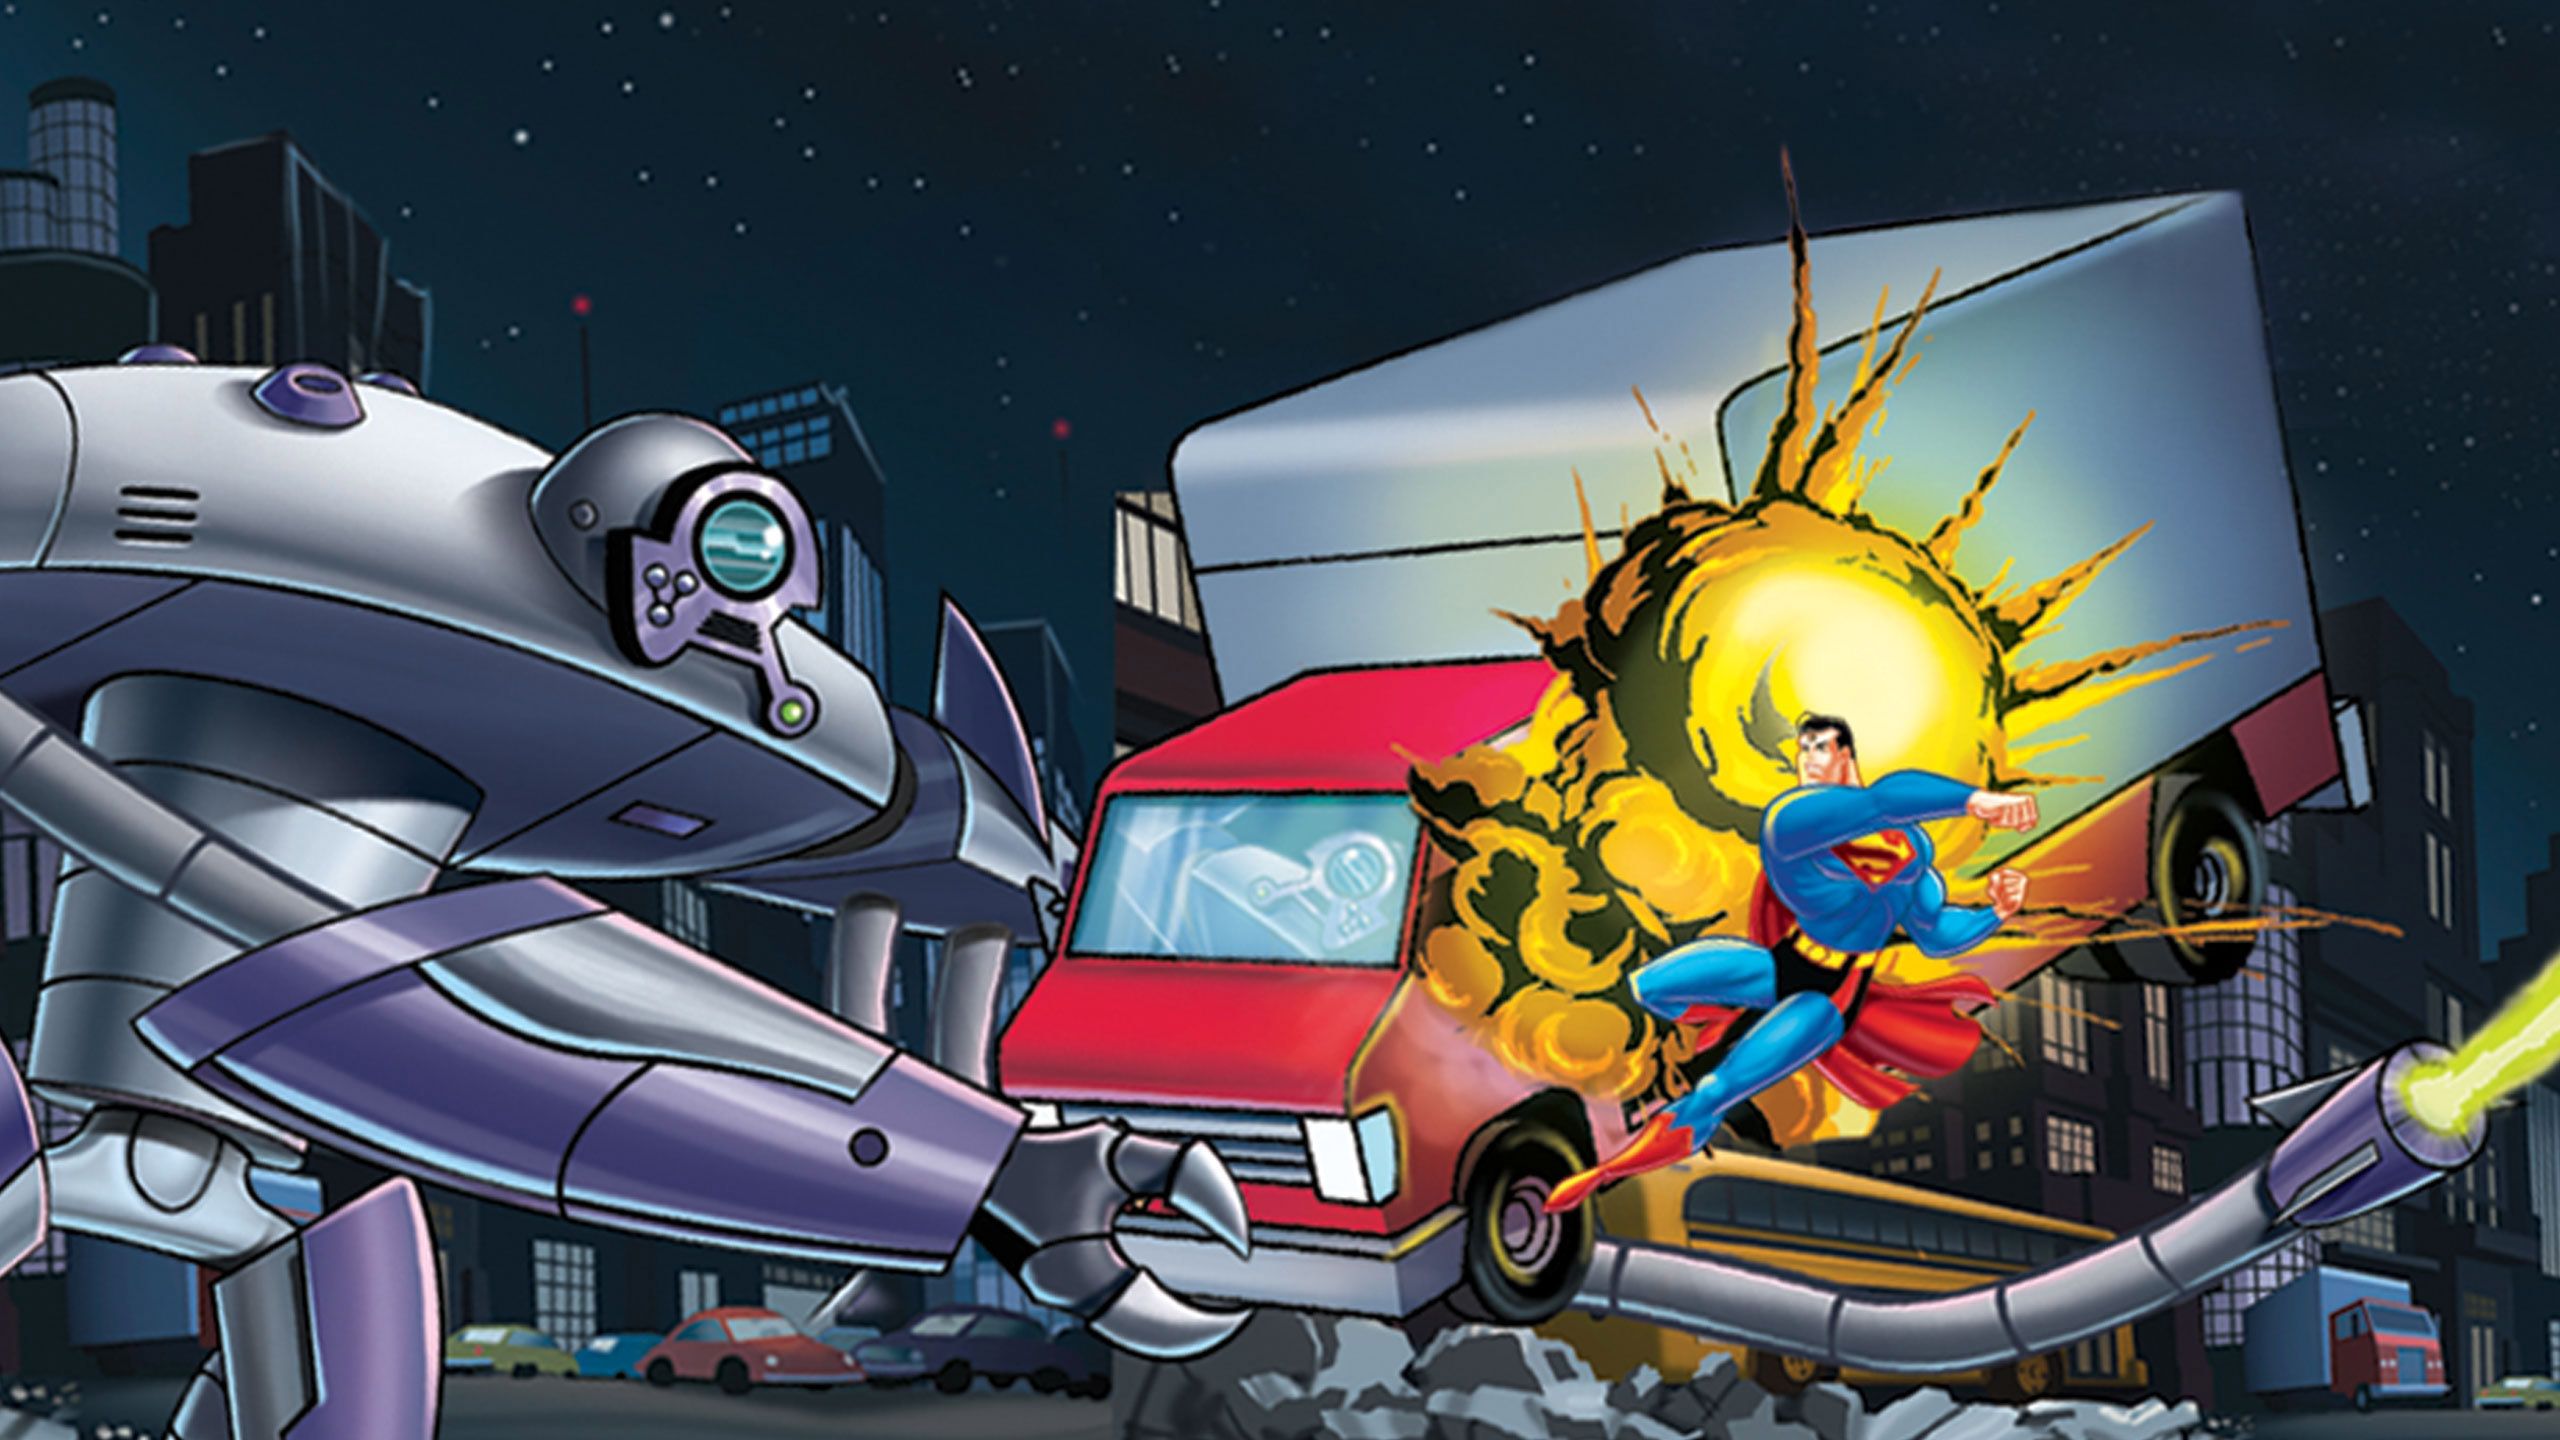 superman brainiac attacks poster